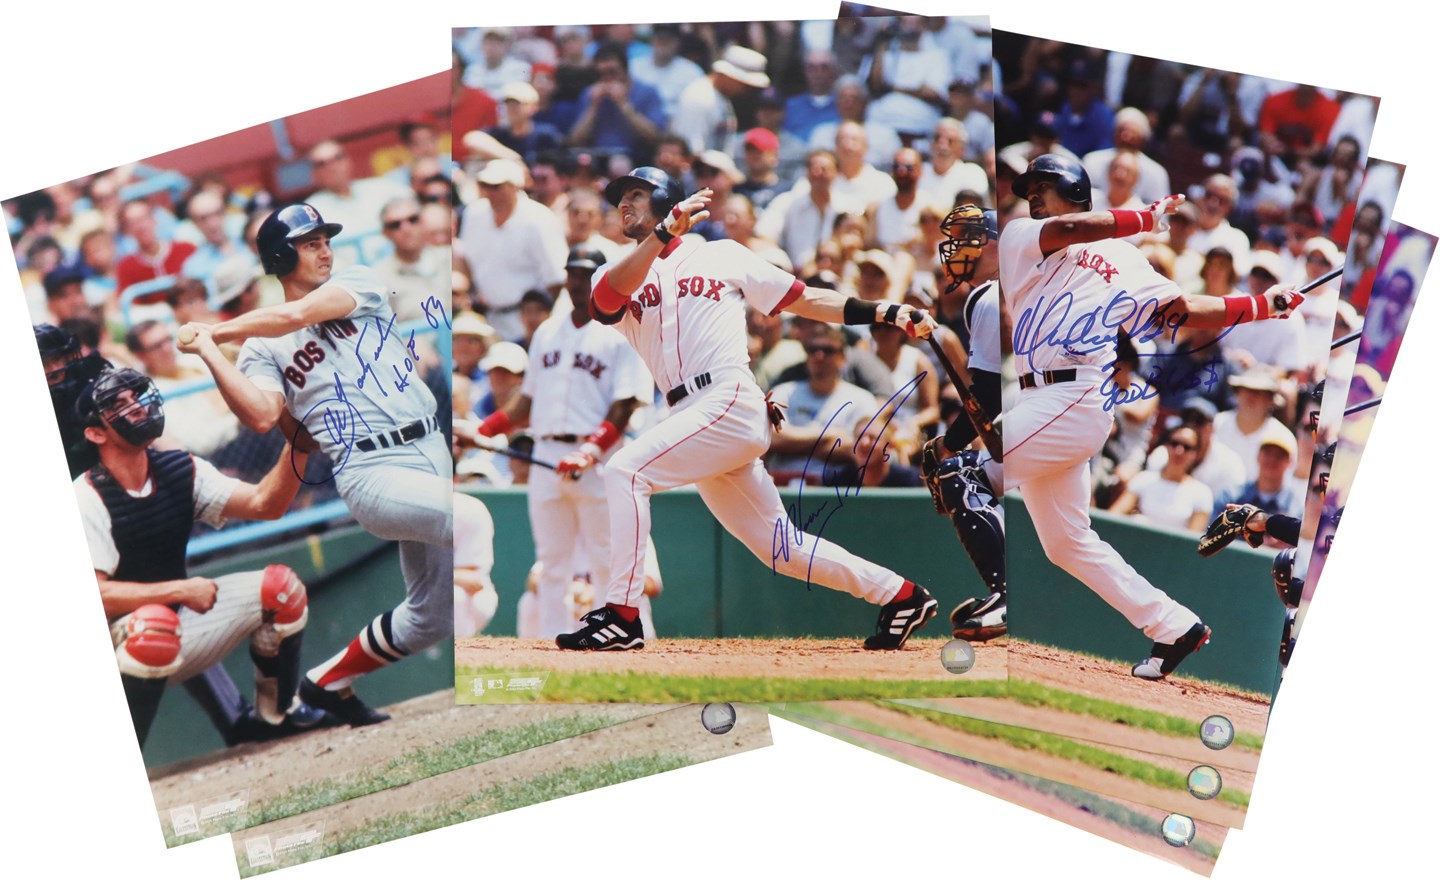 Baseball Autographs - Manny Ramirez, Carl Yastrzemski, & Nomar Garciaparra Signed Oversize Photographs (6)